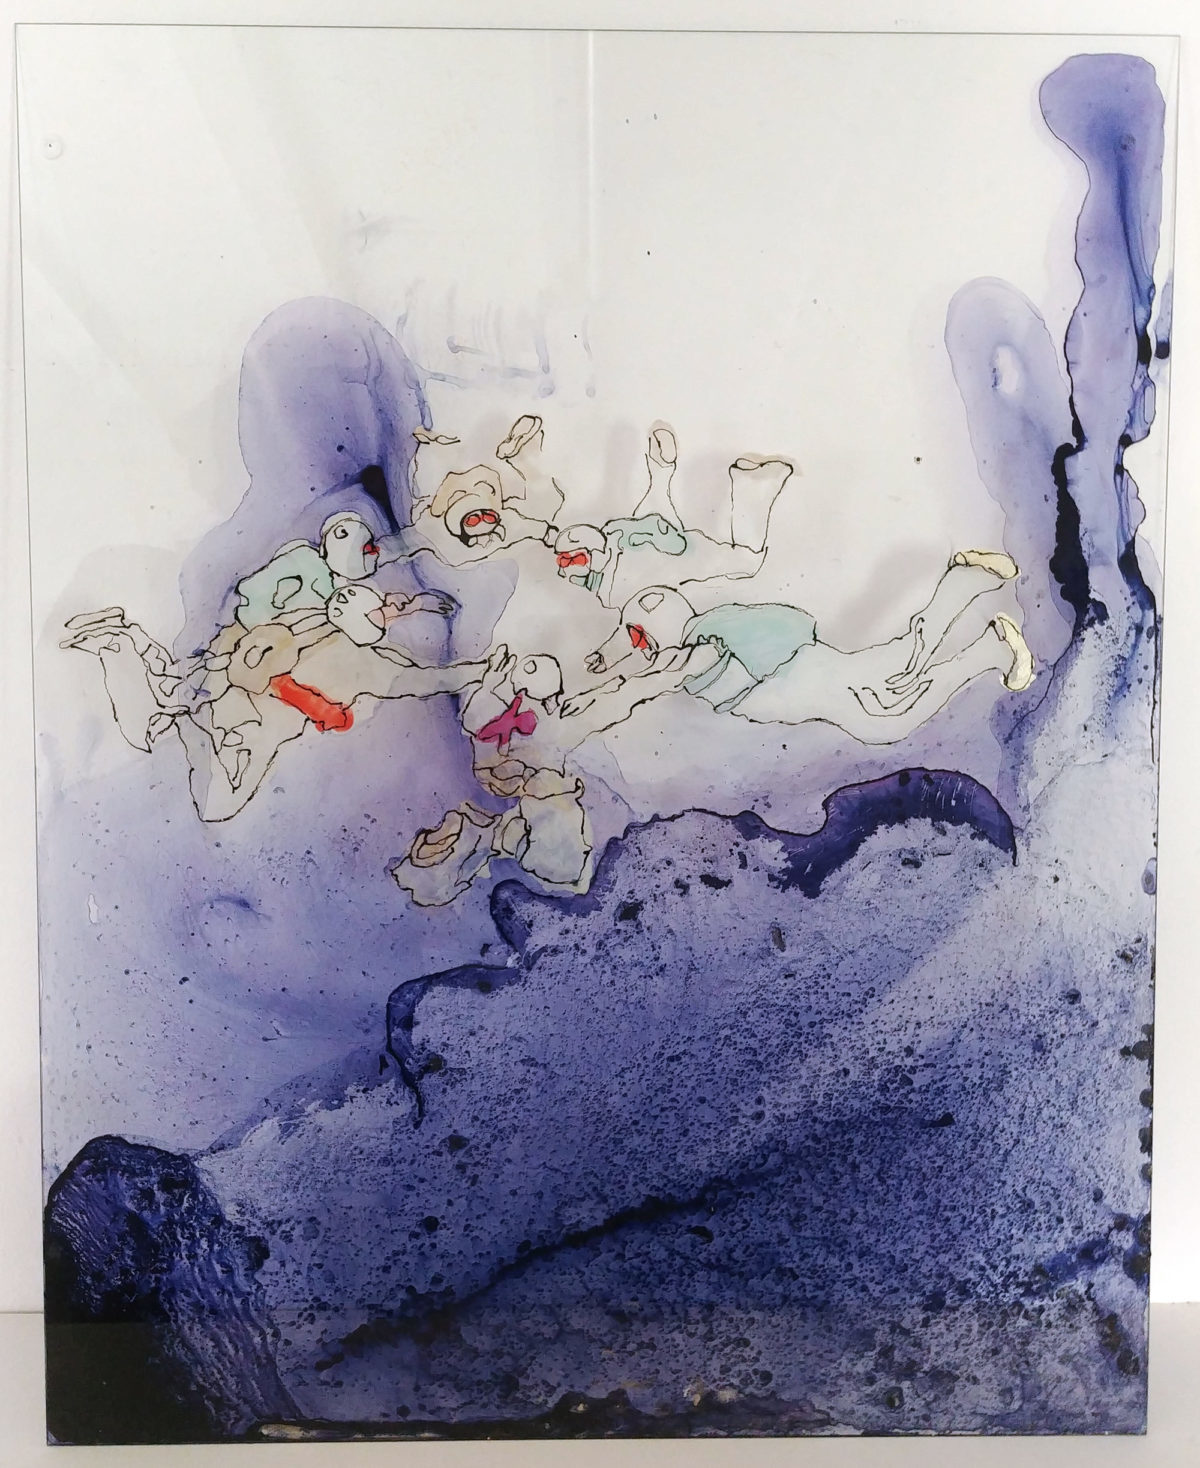 Cristina Ohlmer, FREIER FALL 6er Kreis oben, 2020, 50 x 40cm Tusche/Lacke hinter Glas, Courtesy the artist